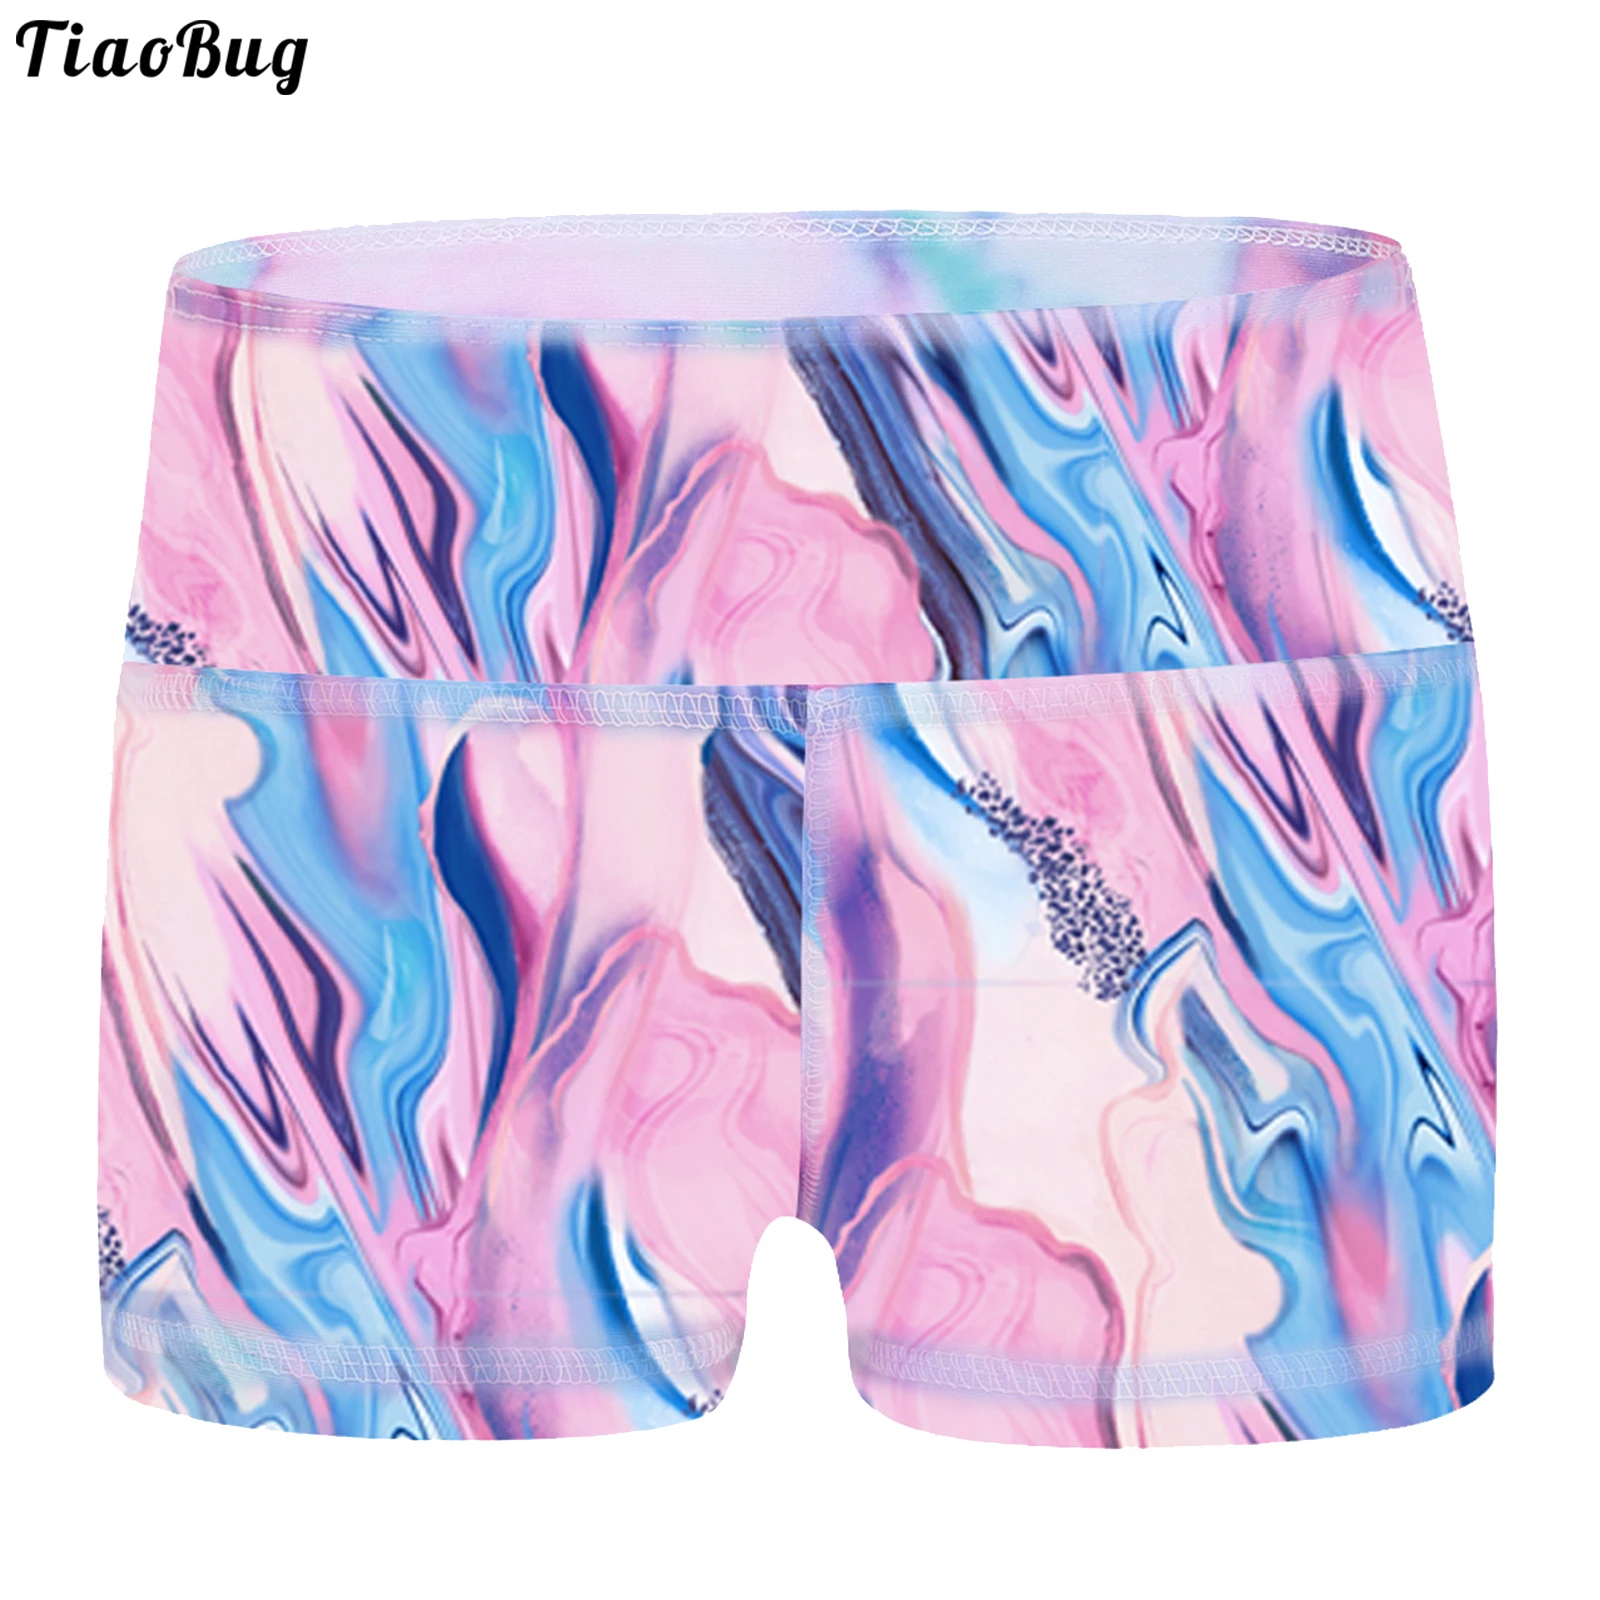 

TiaoBug Summer Kids Girls Skiny Dance Boy-Cut High Waist Dye Print Shorts Bottoms Sports Gymnastic Workout Activewear